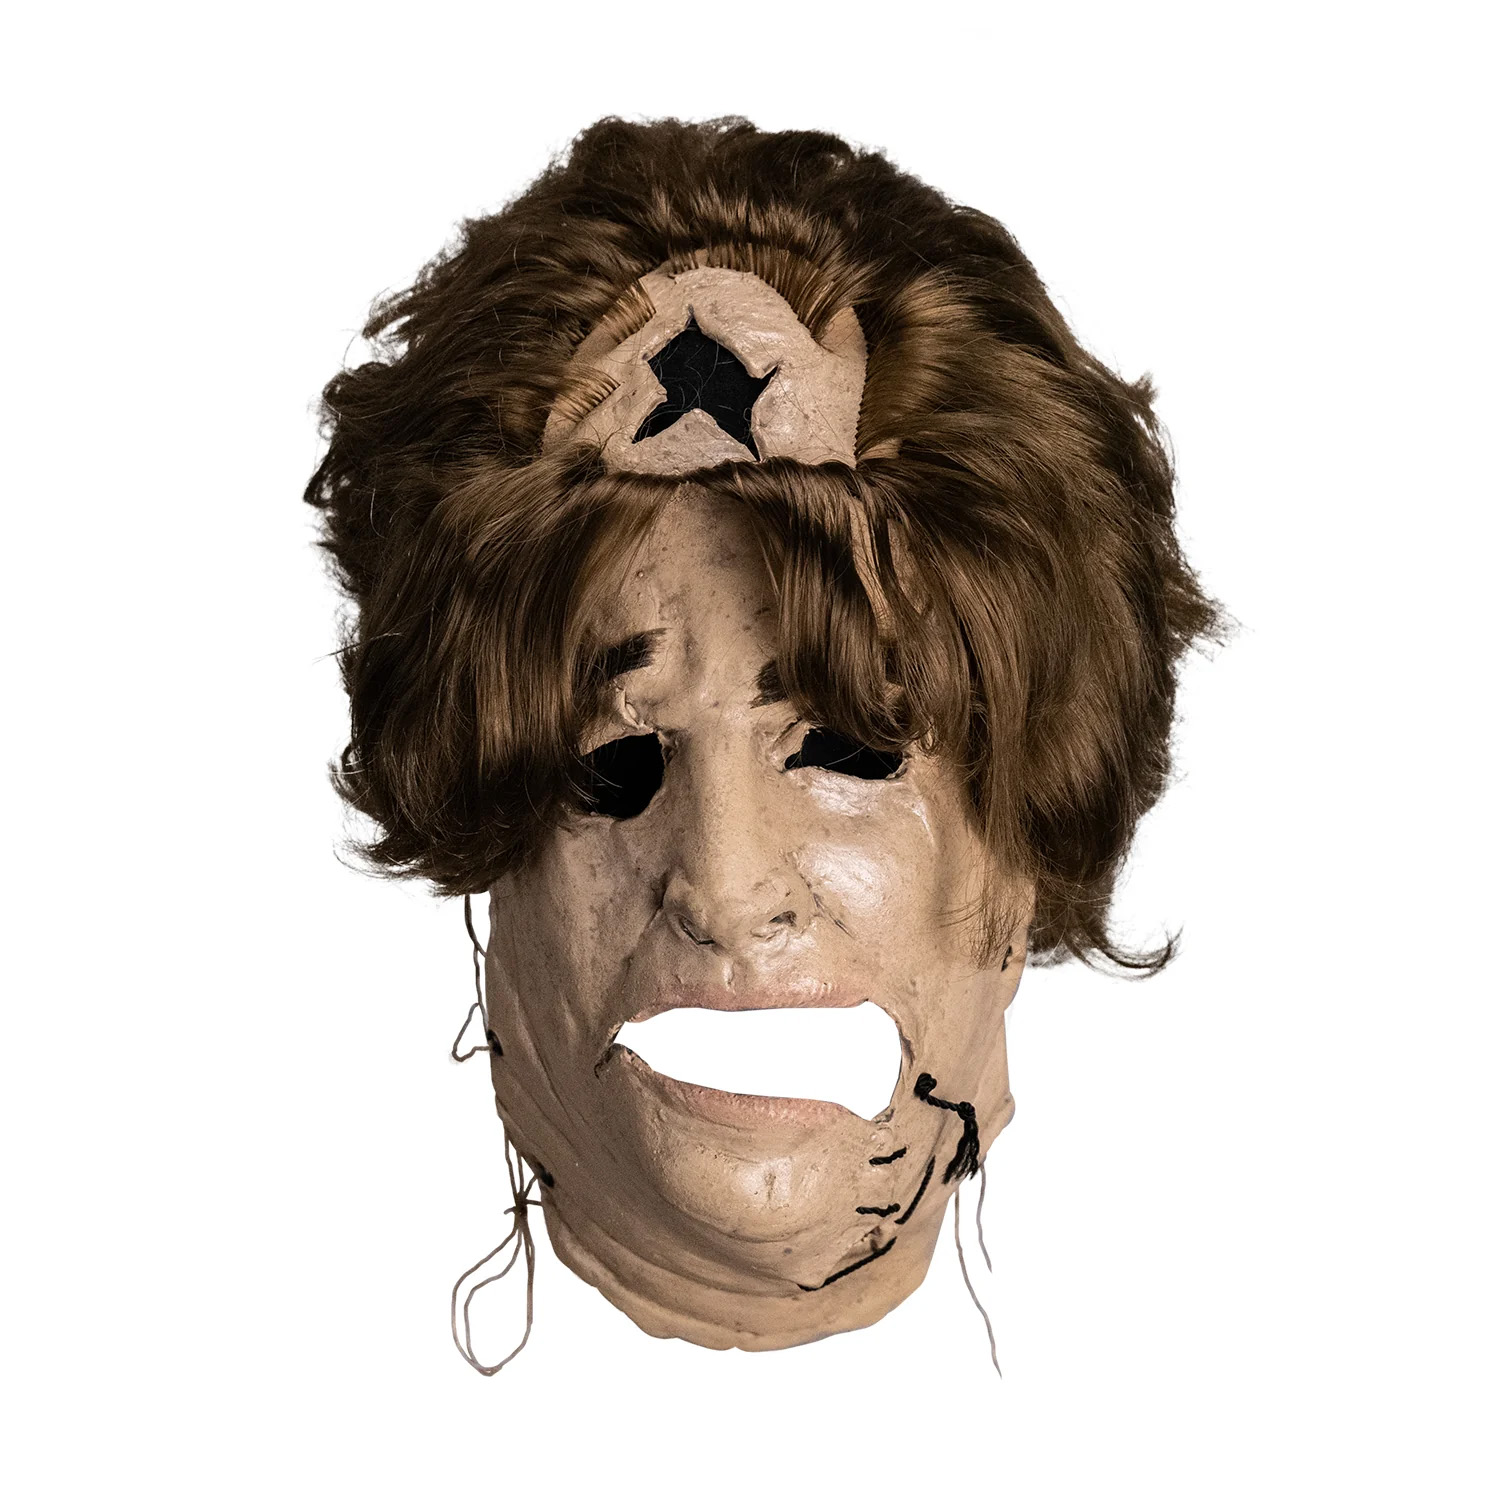 Texas Chainsaw Massacre - Leatherface 1974 - Grandma Mask